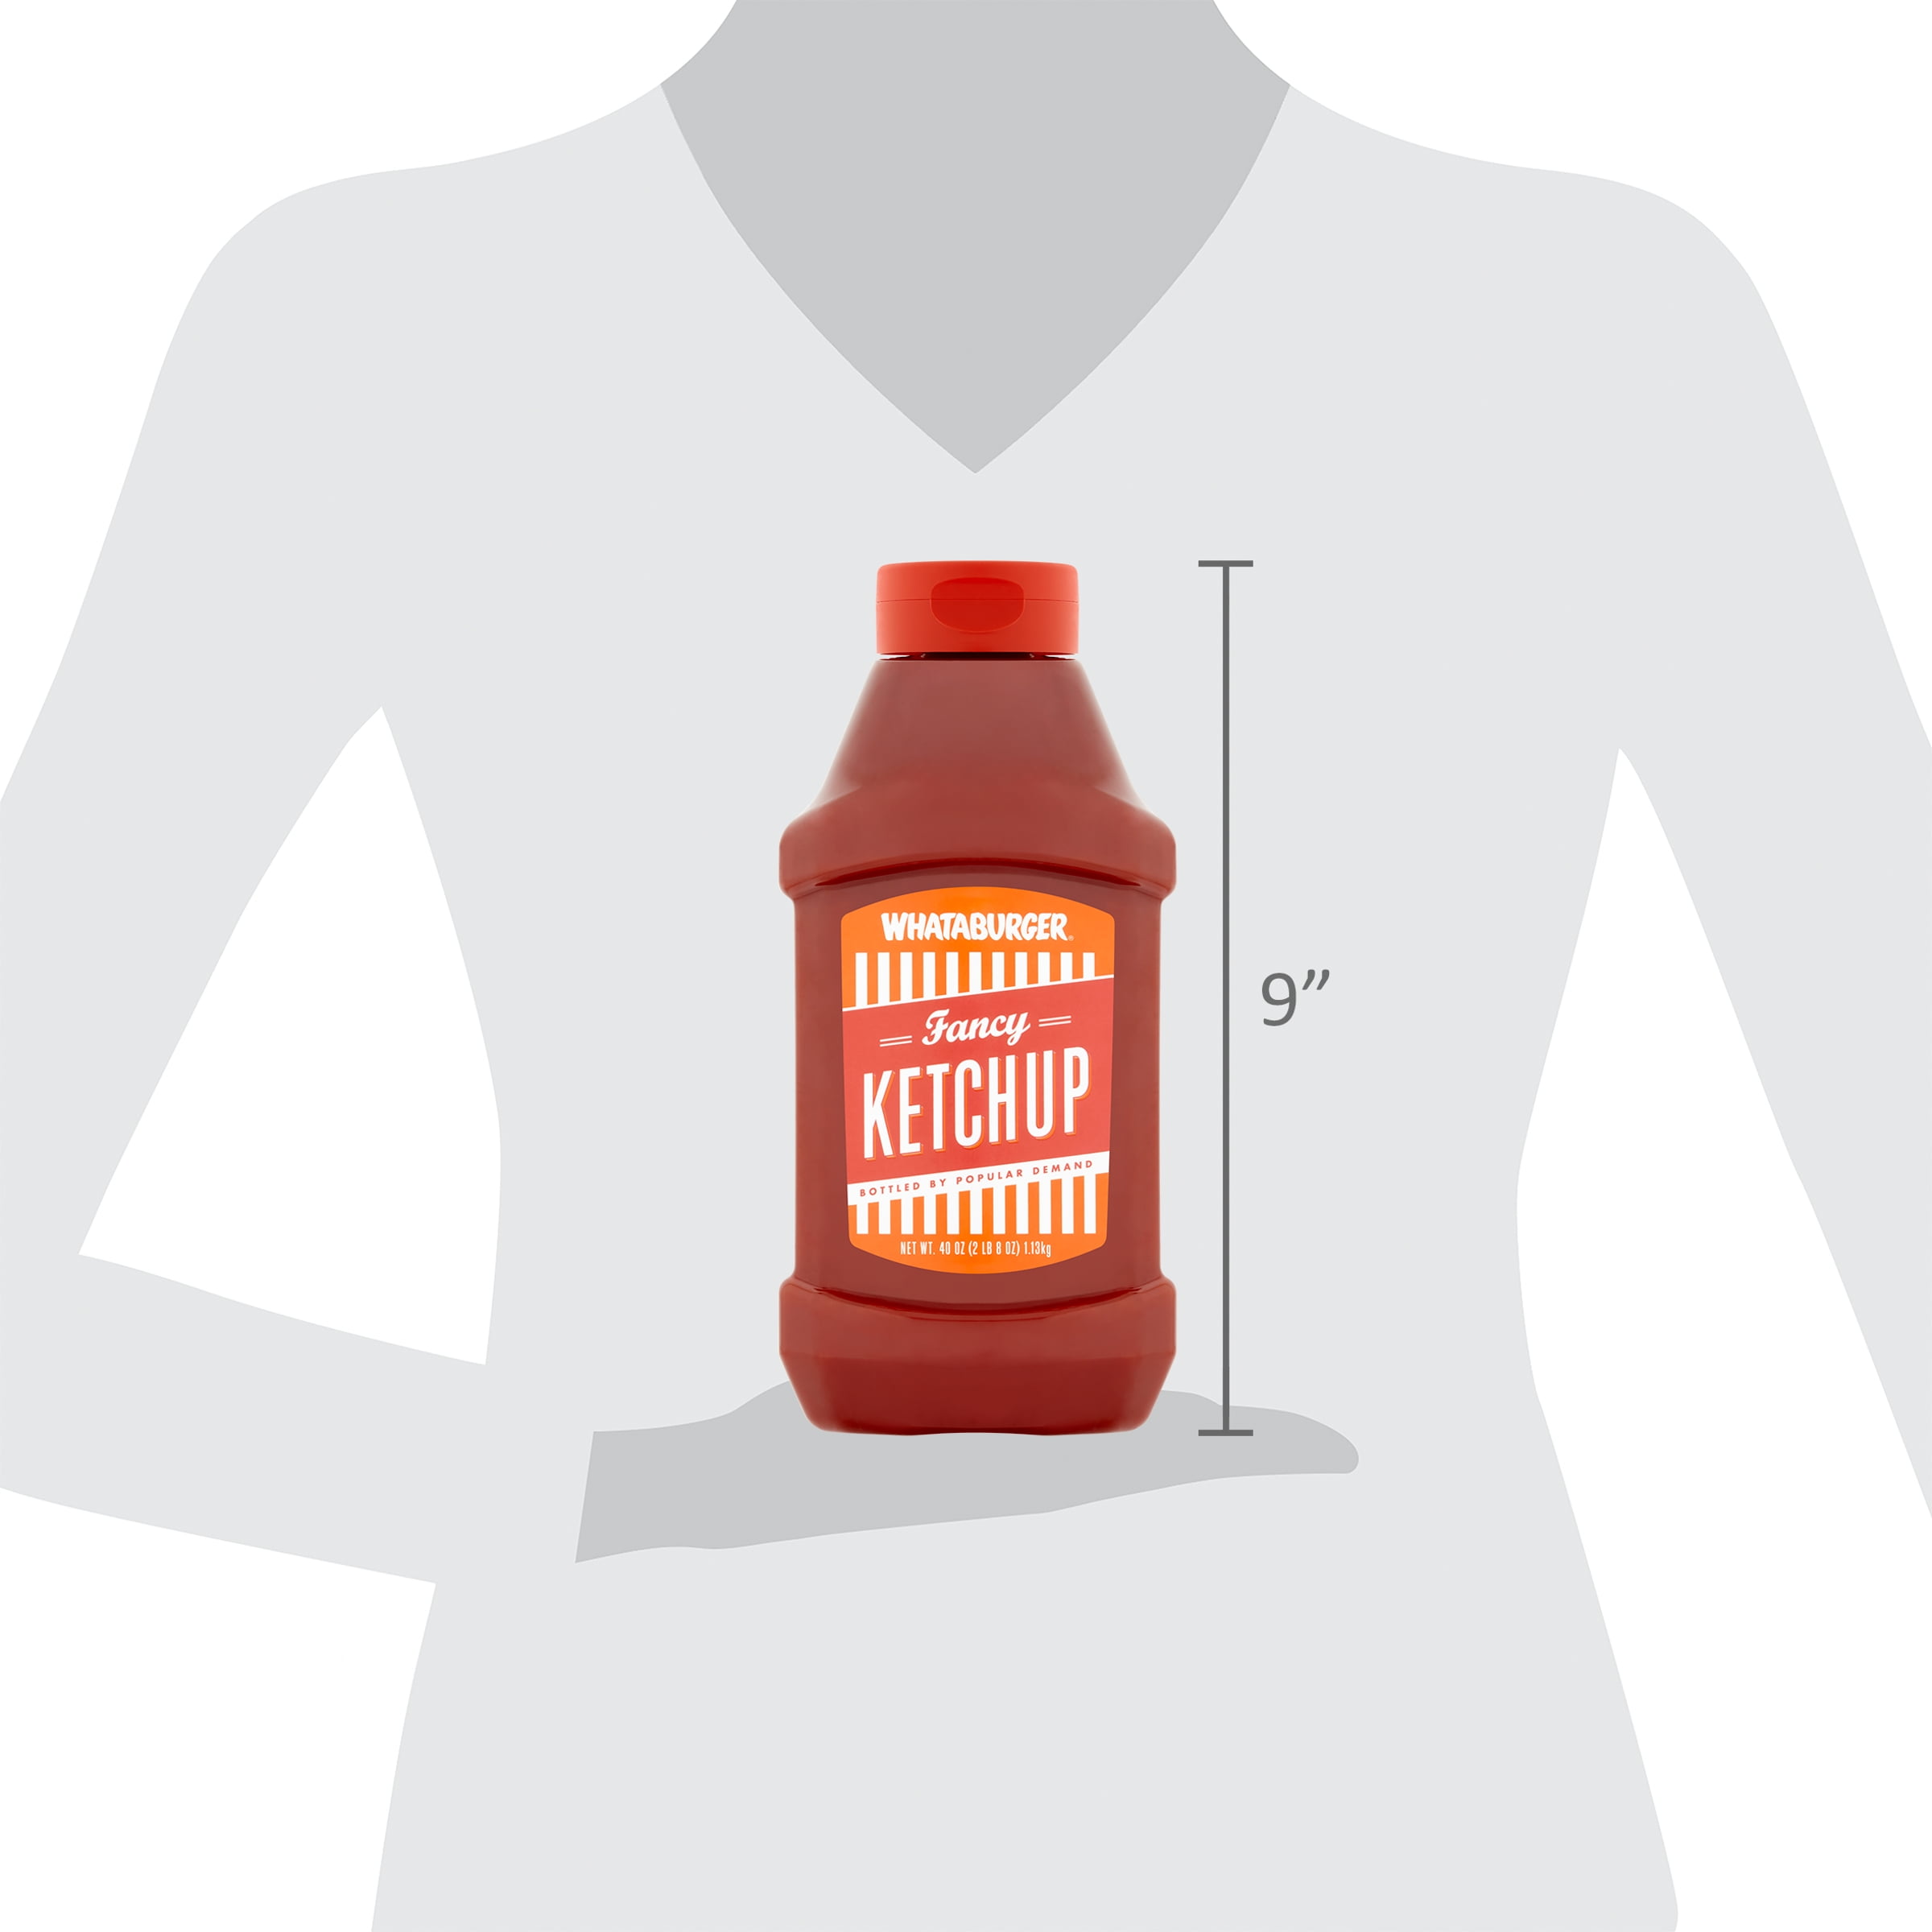 Whataburger teases new ketchup flavor